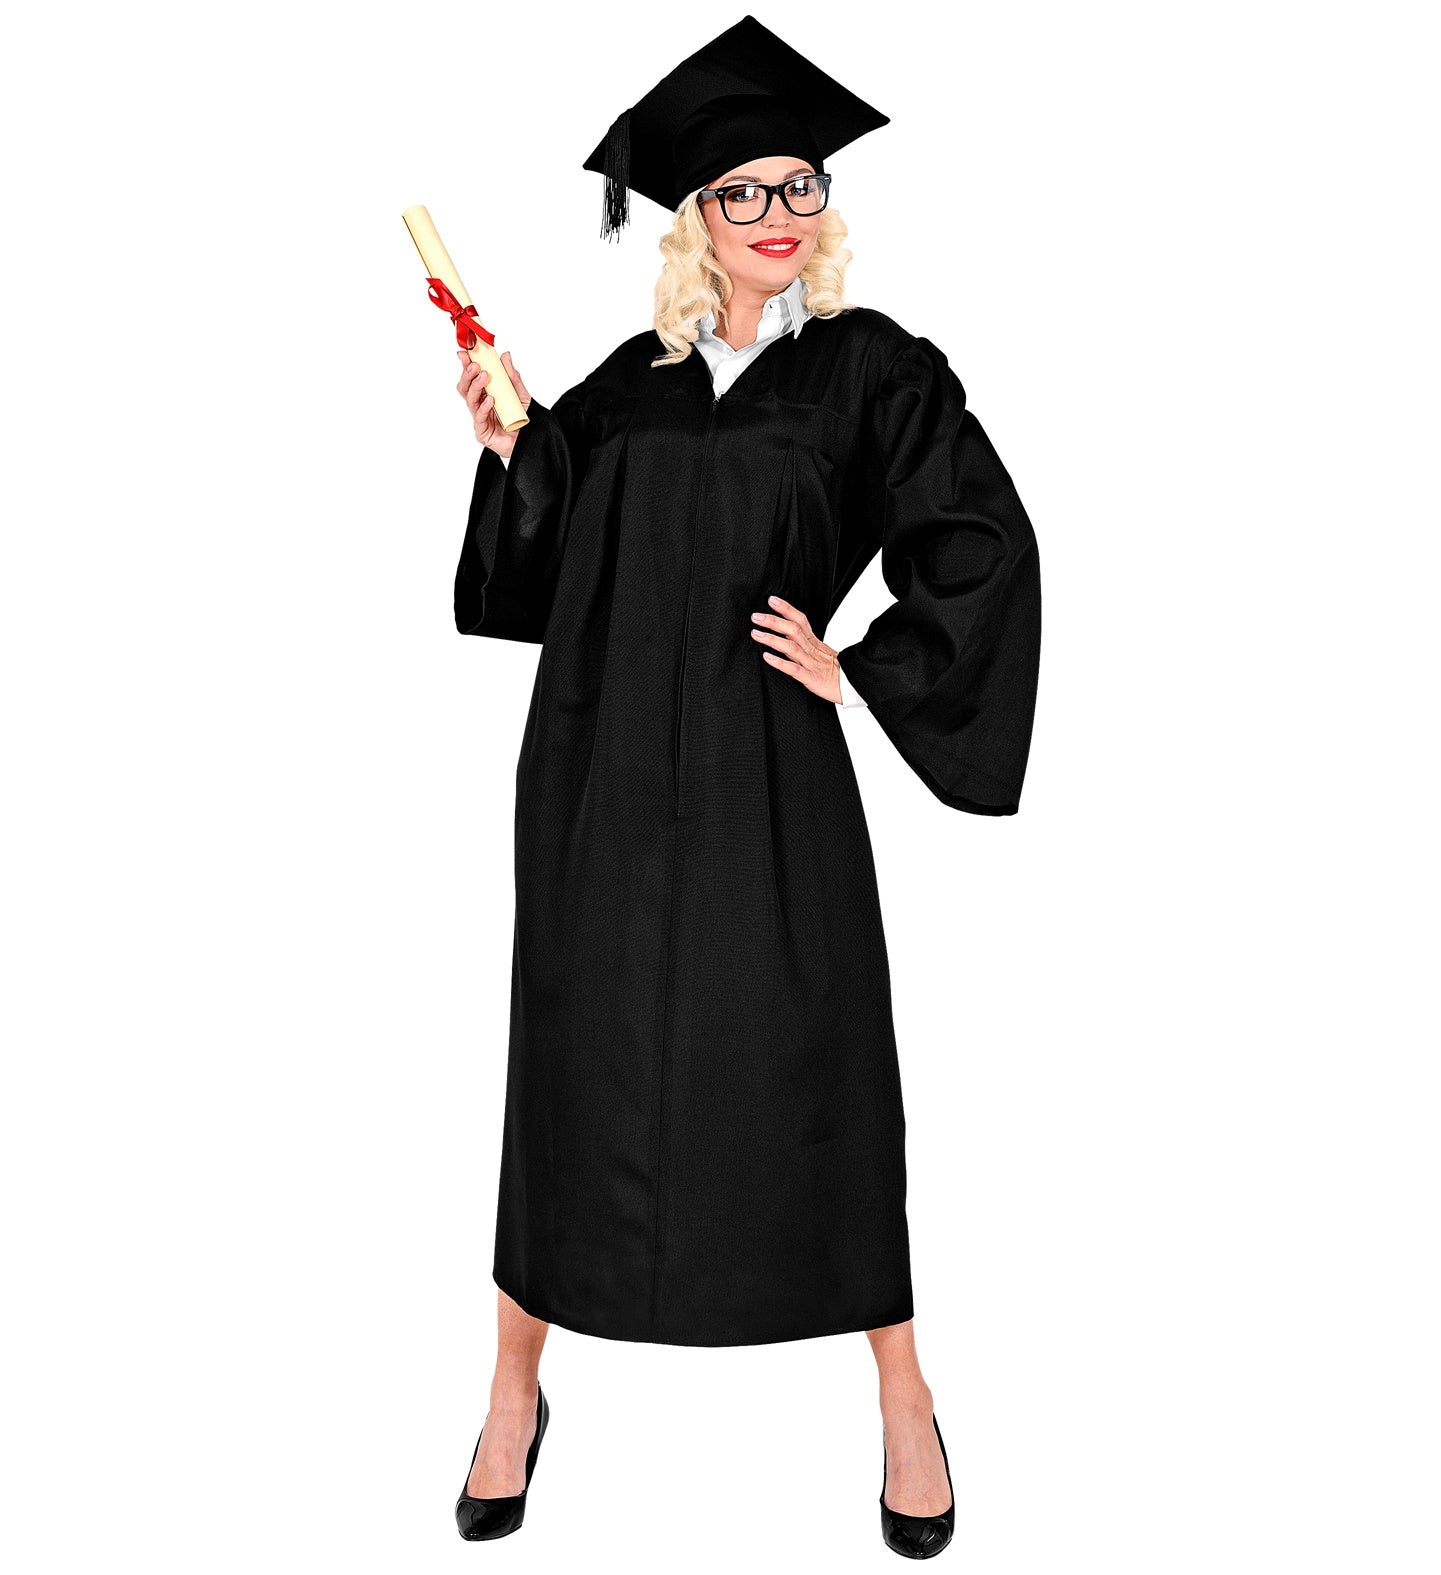 School Graduation Costume for women